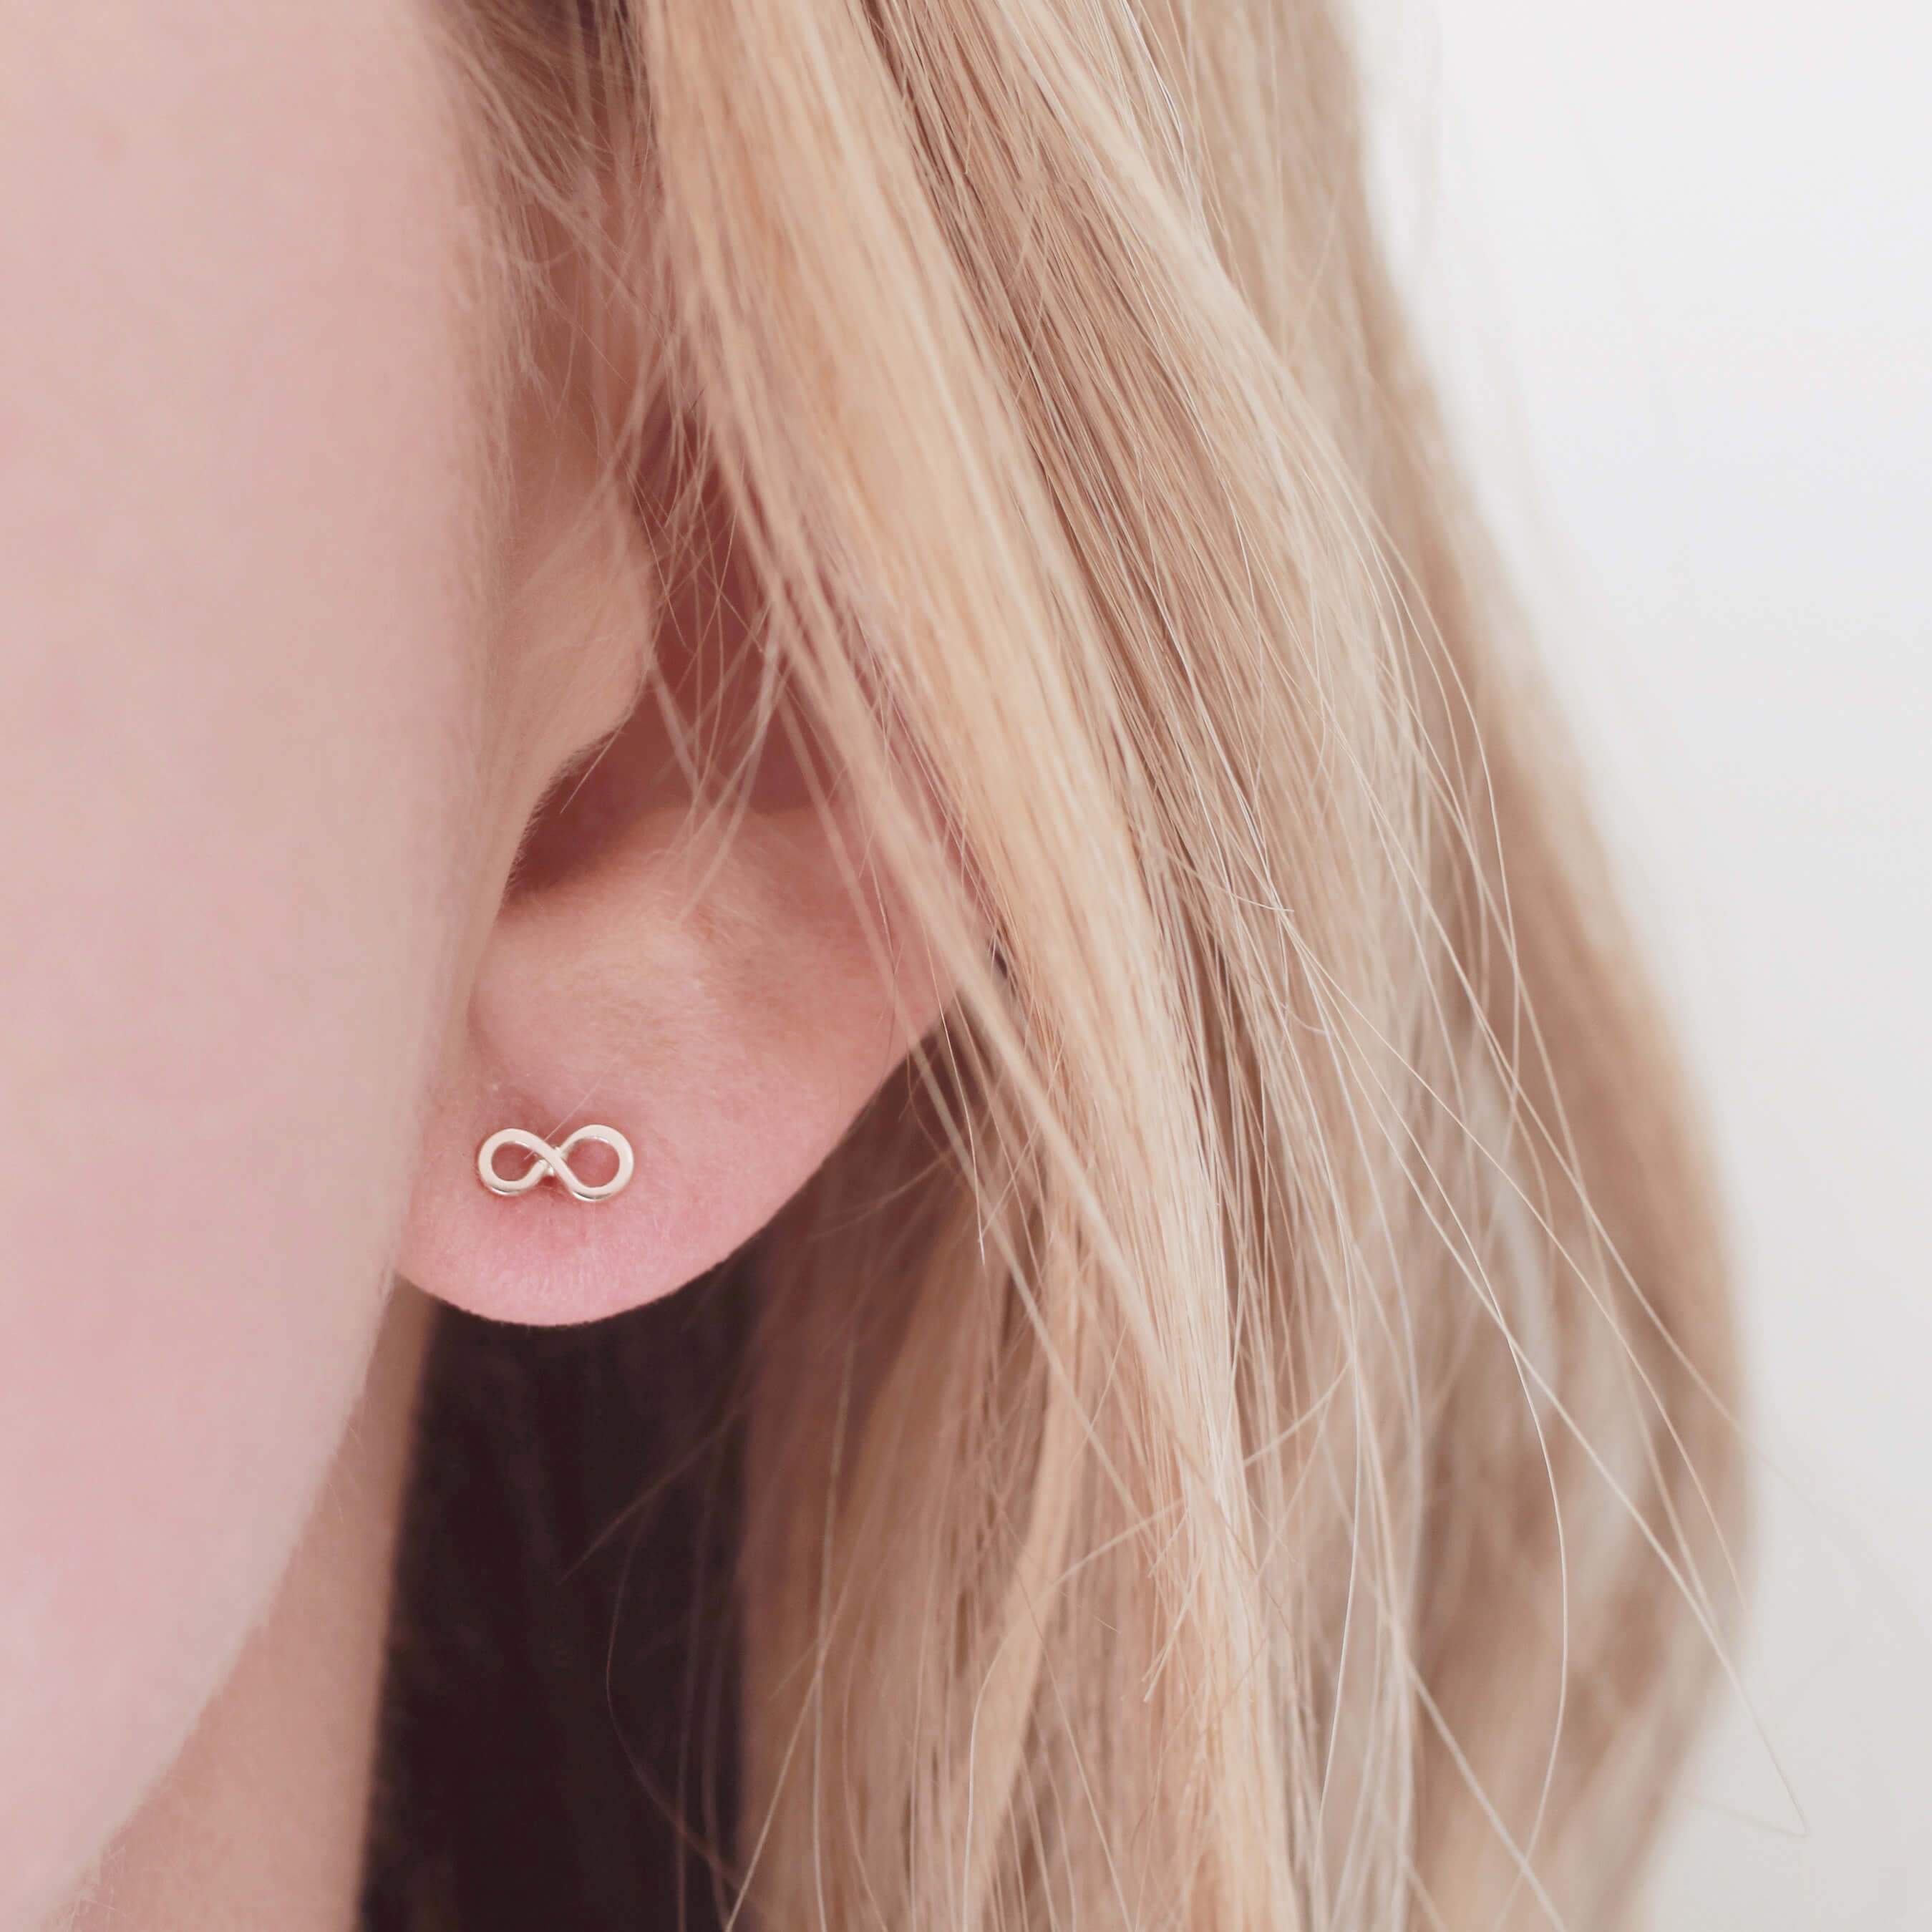 Infinity symbol earrings